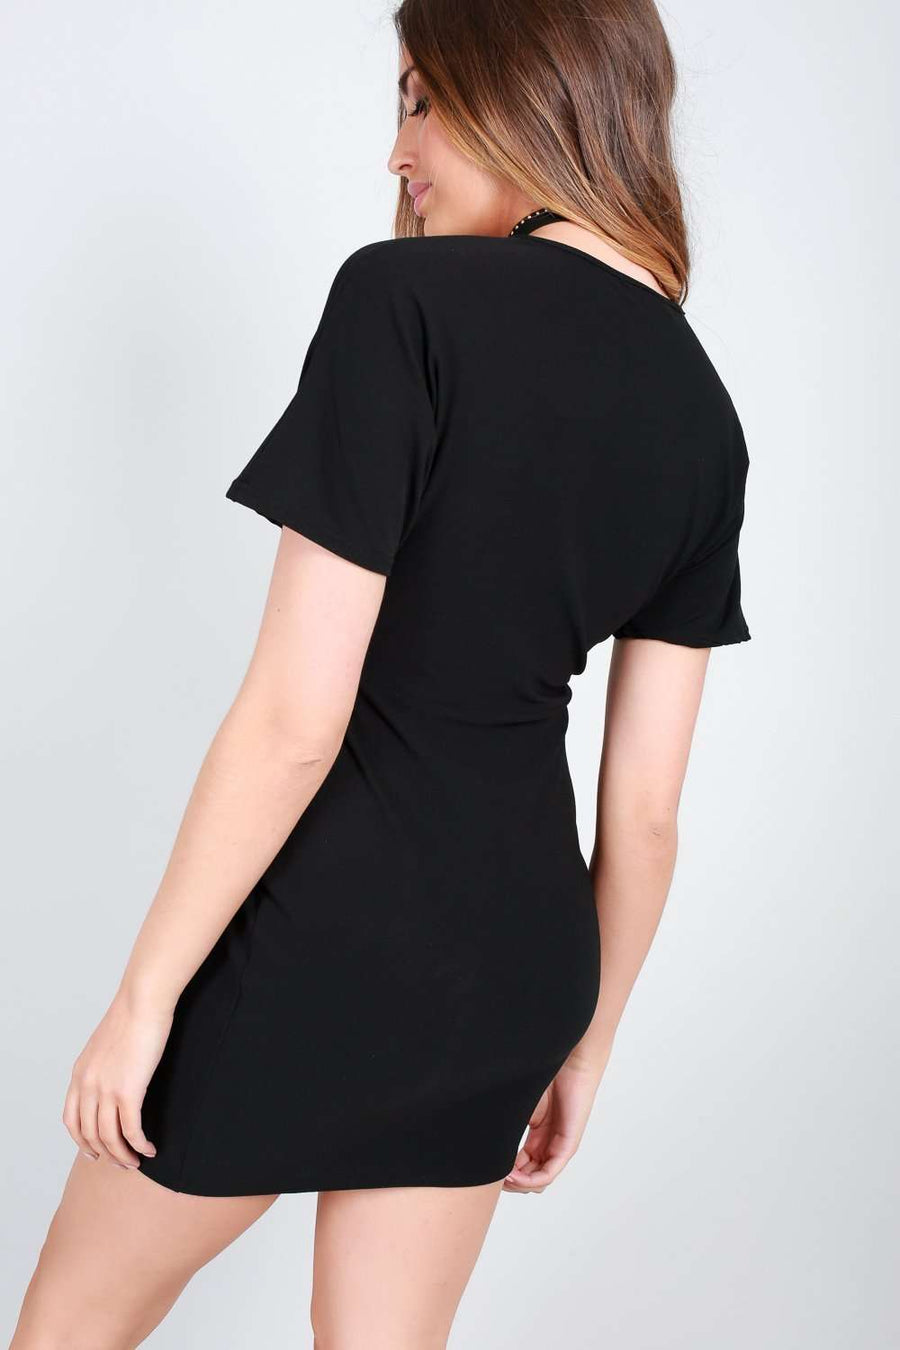 Casie Black Vneck Short Sleeve Mini Dress - bejealous-com